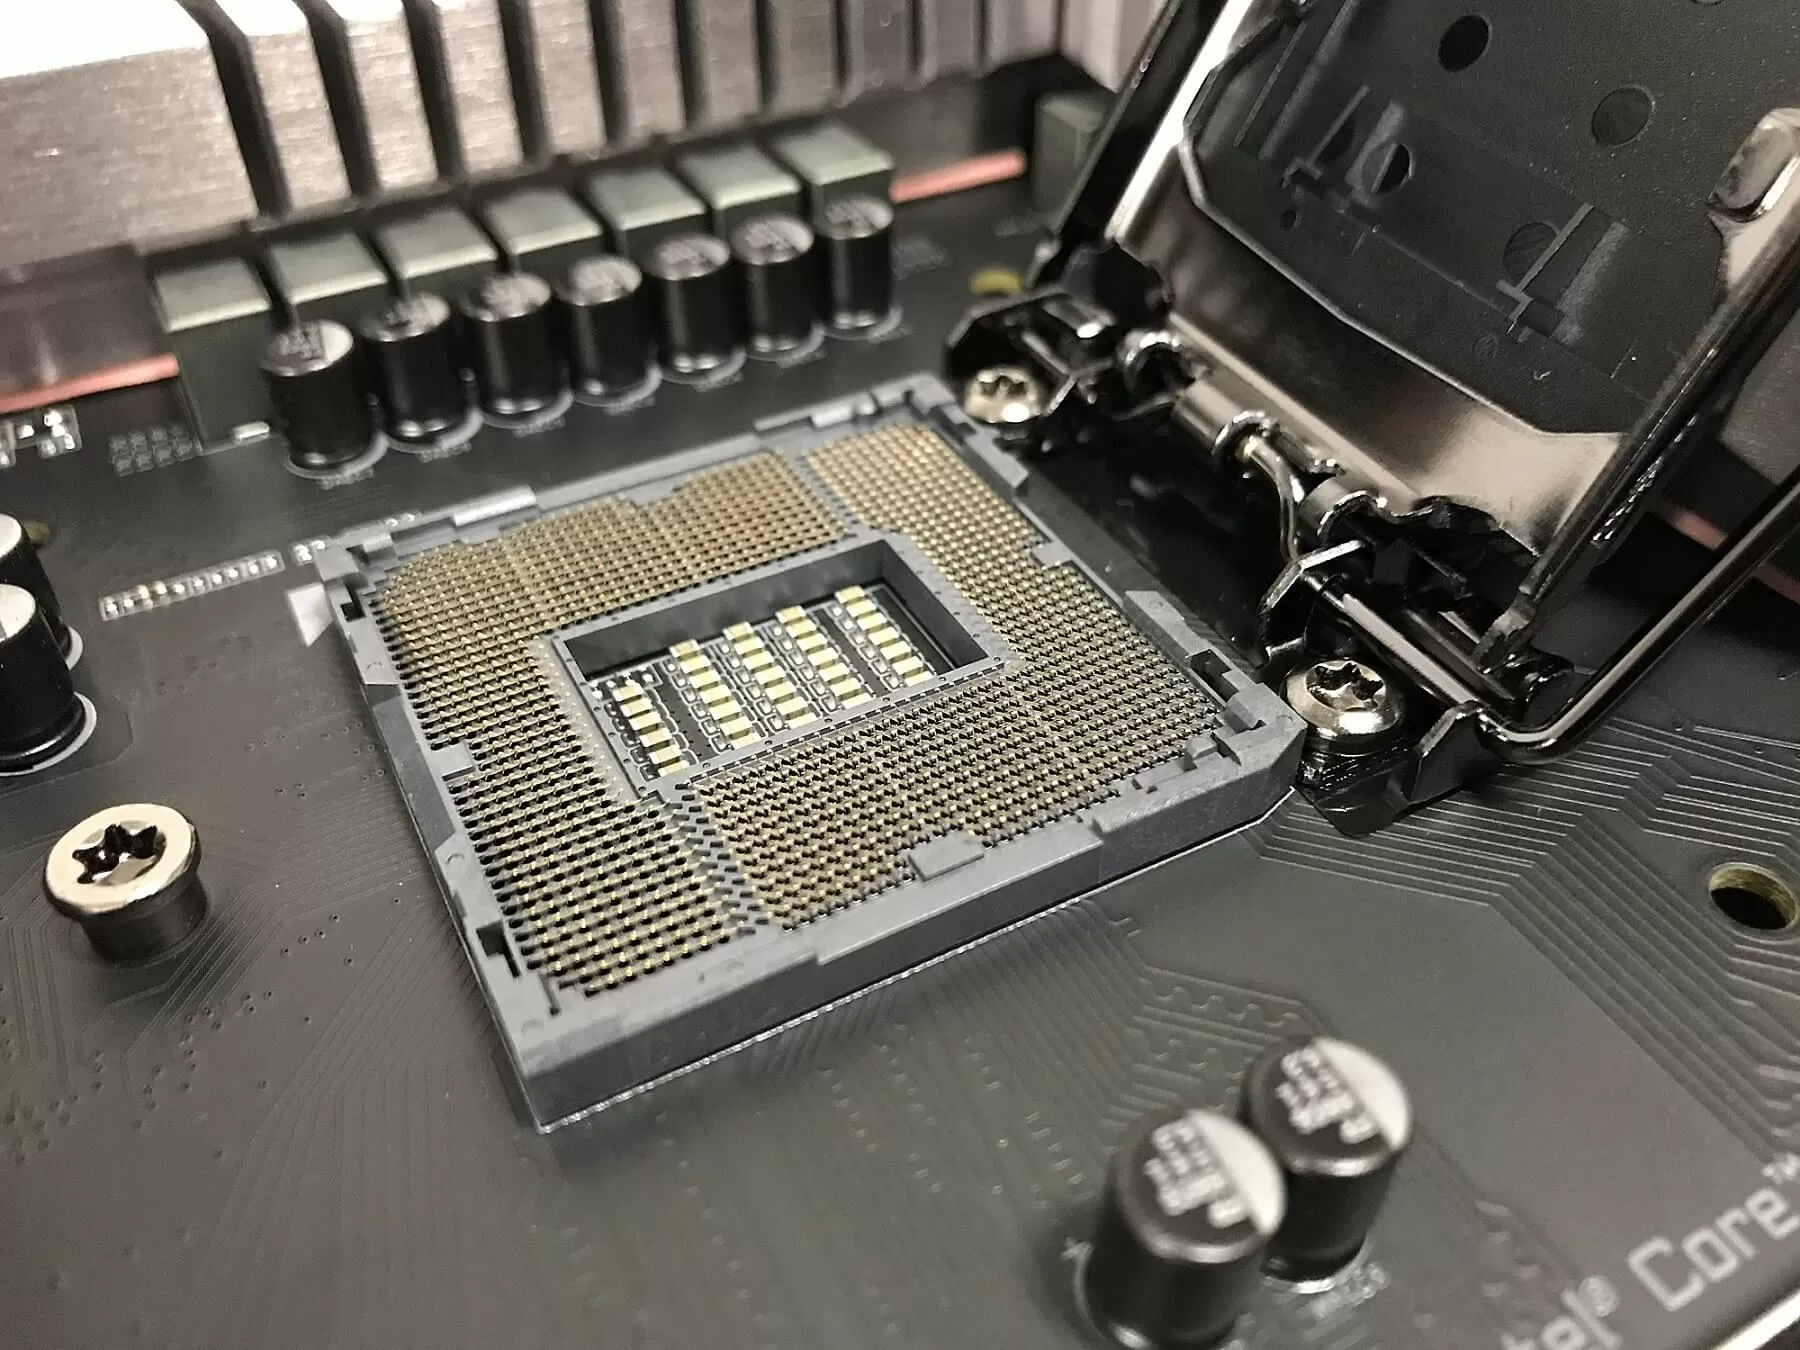 Intel confirms switch to LGA 1700 socket for Alder Lake CPUs